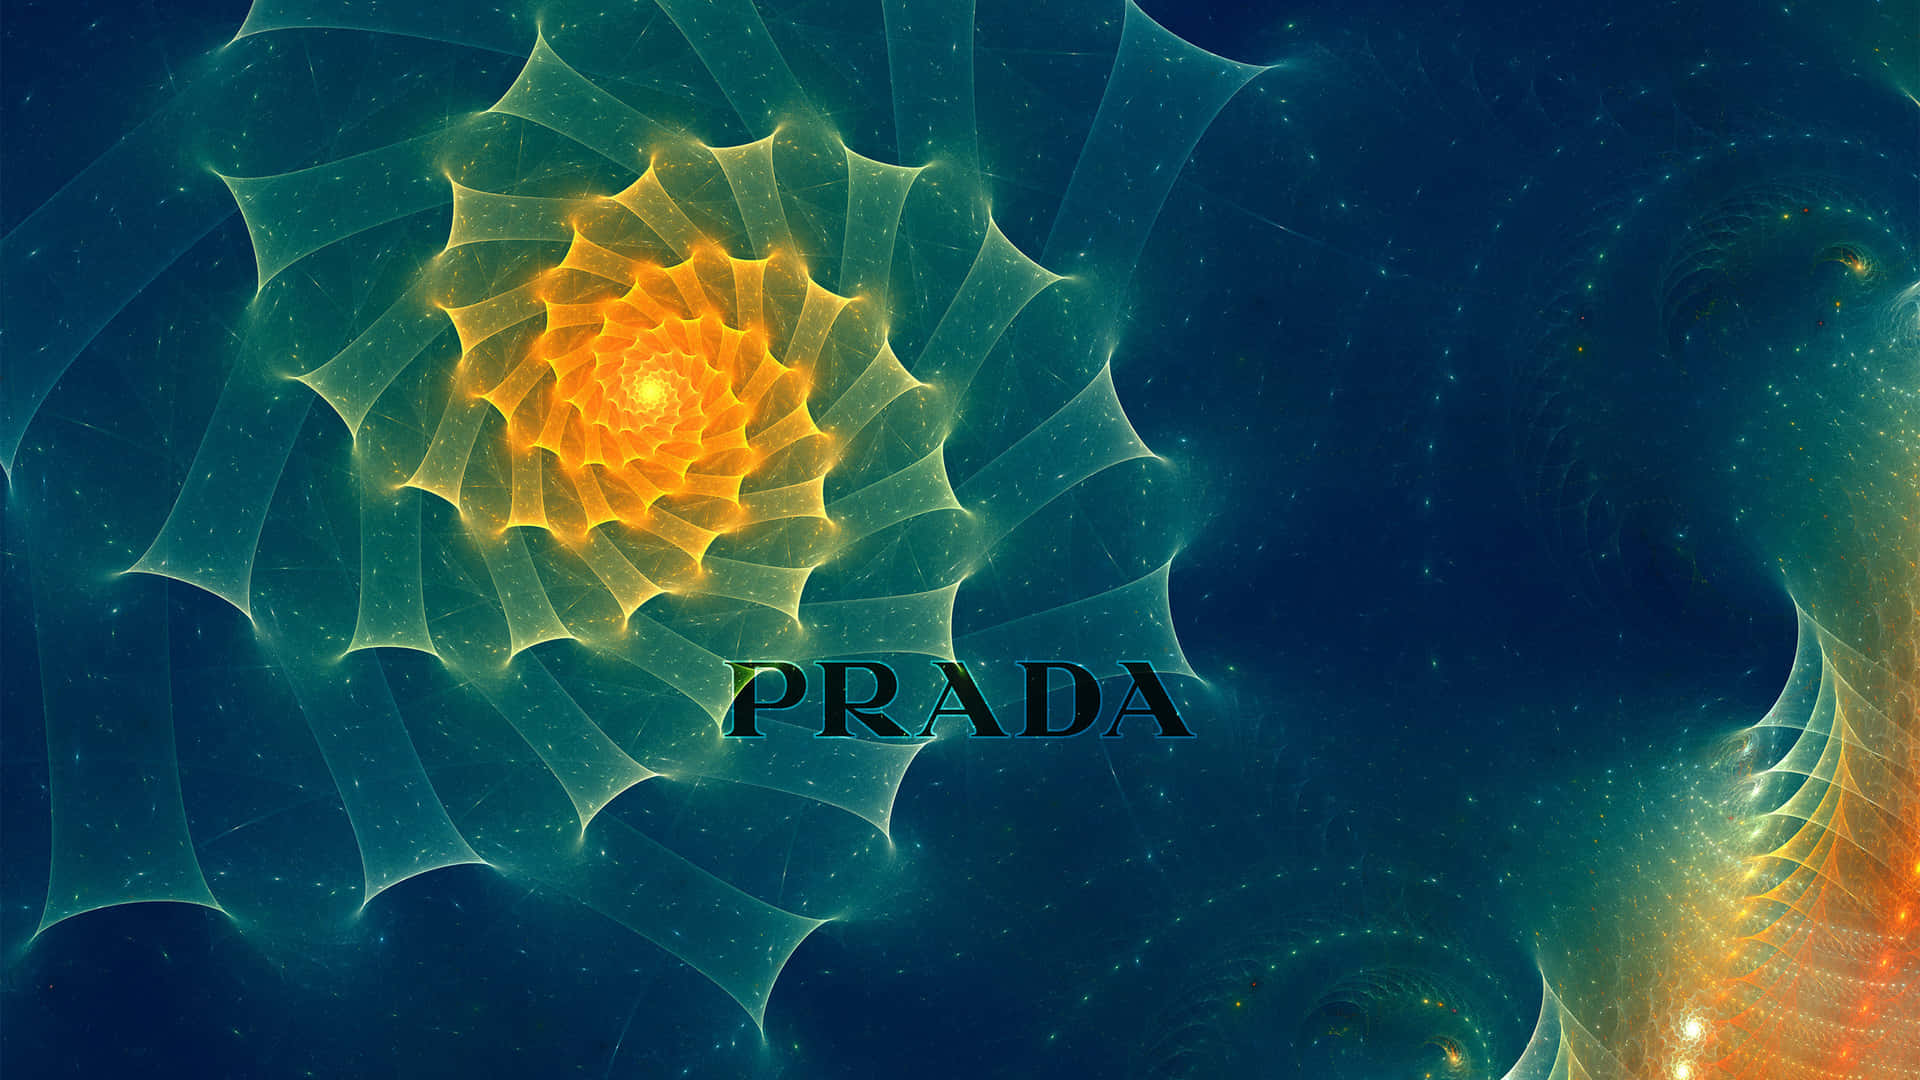 Prada's luxurious fashion and tailored style